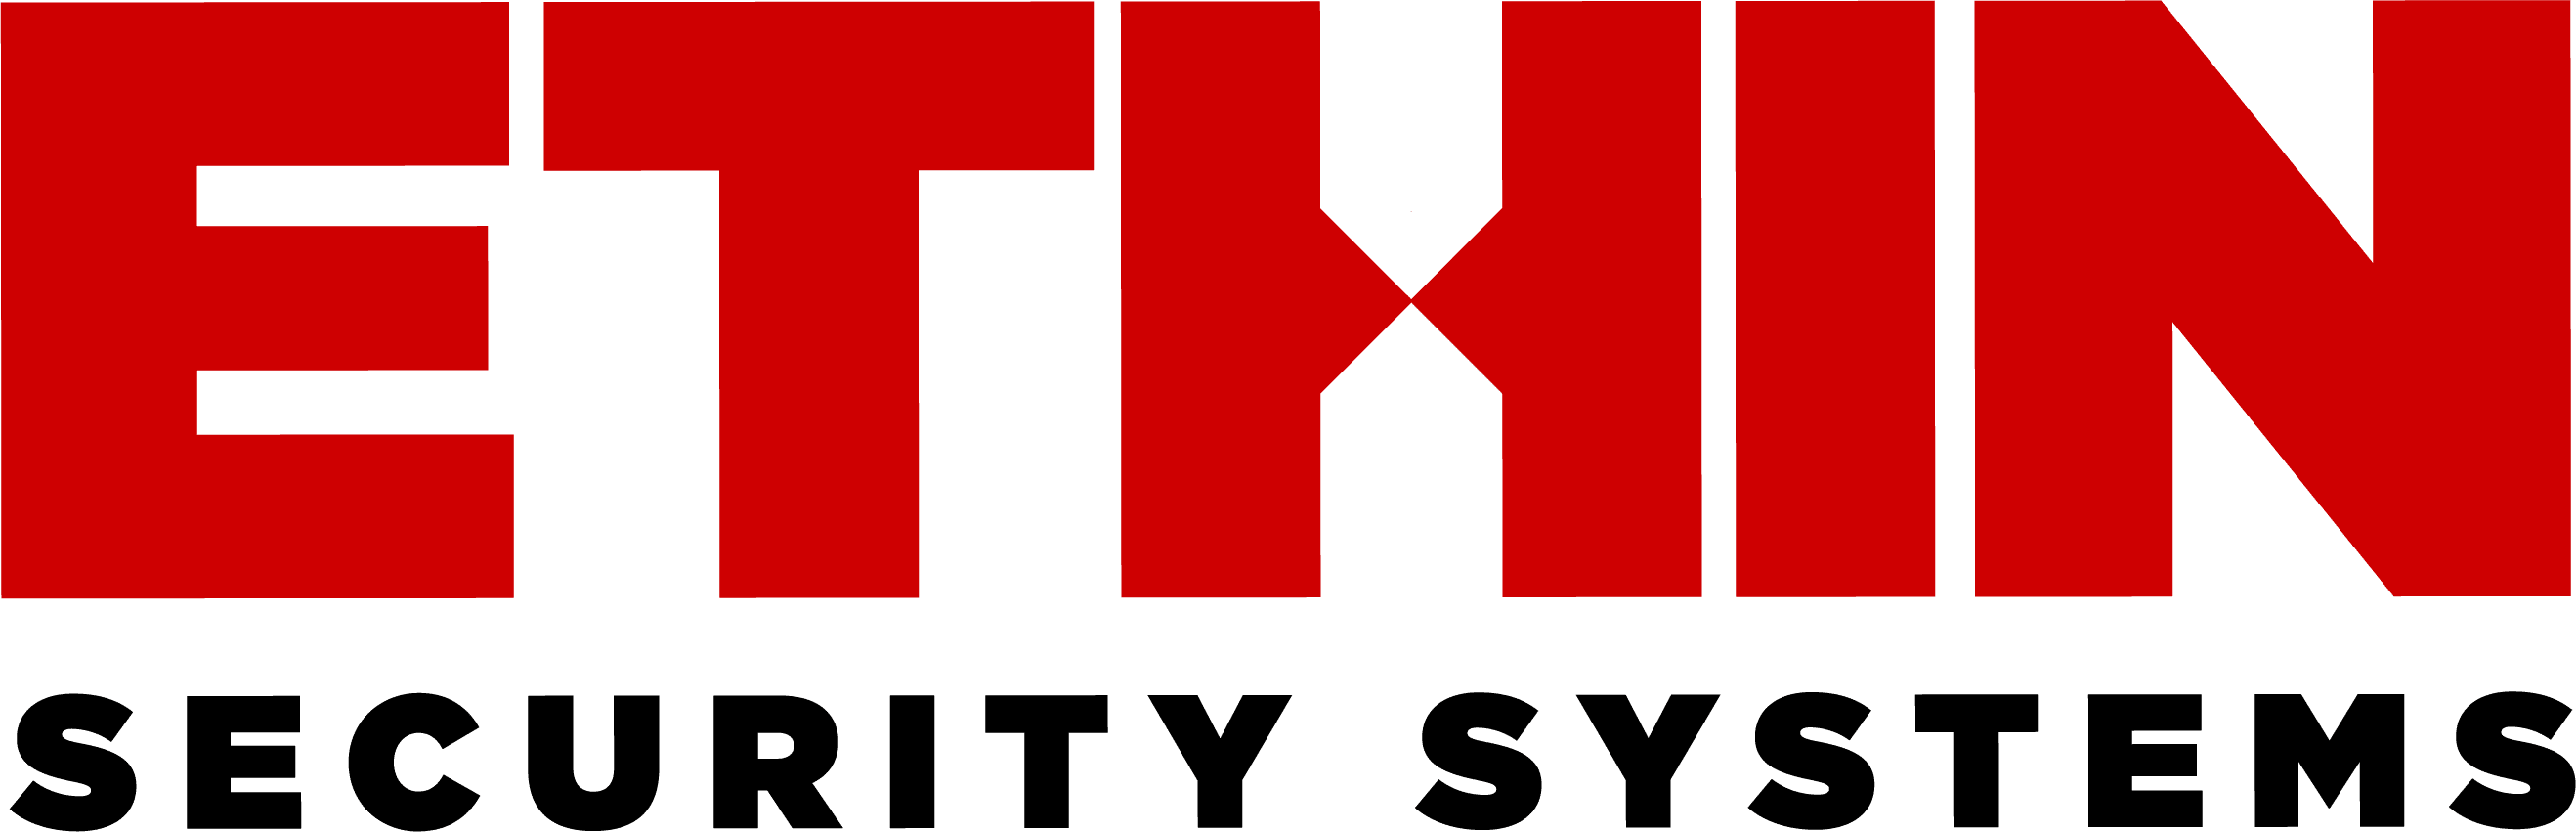 Ethin Security Systems | logo